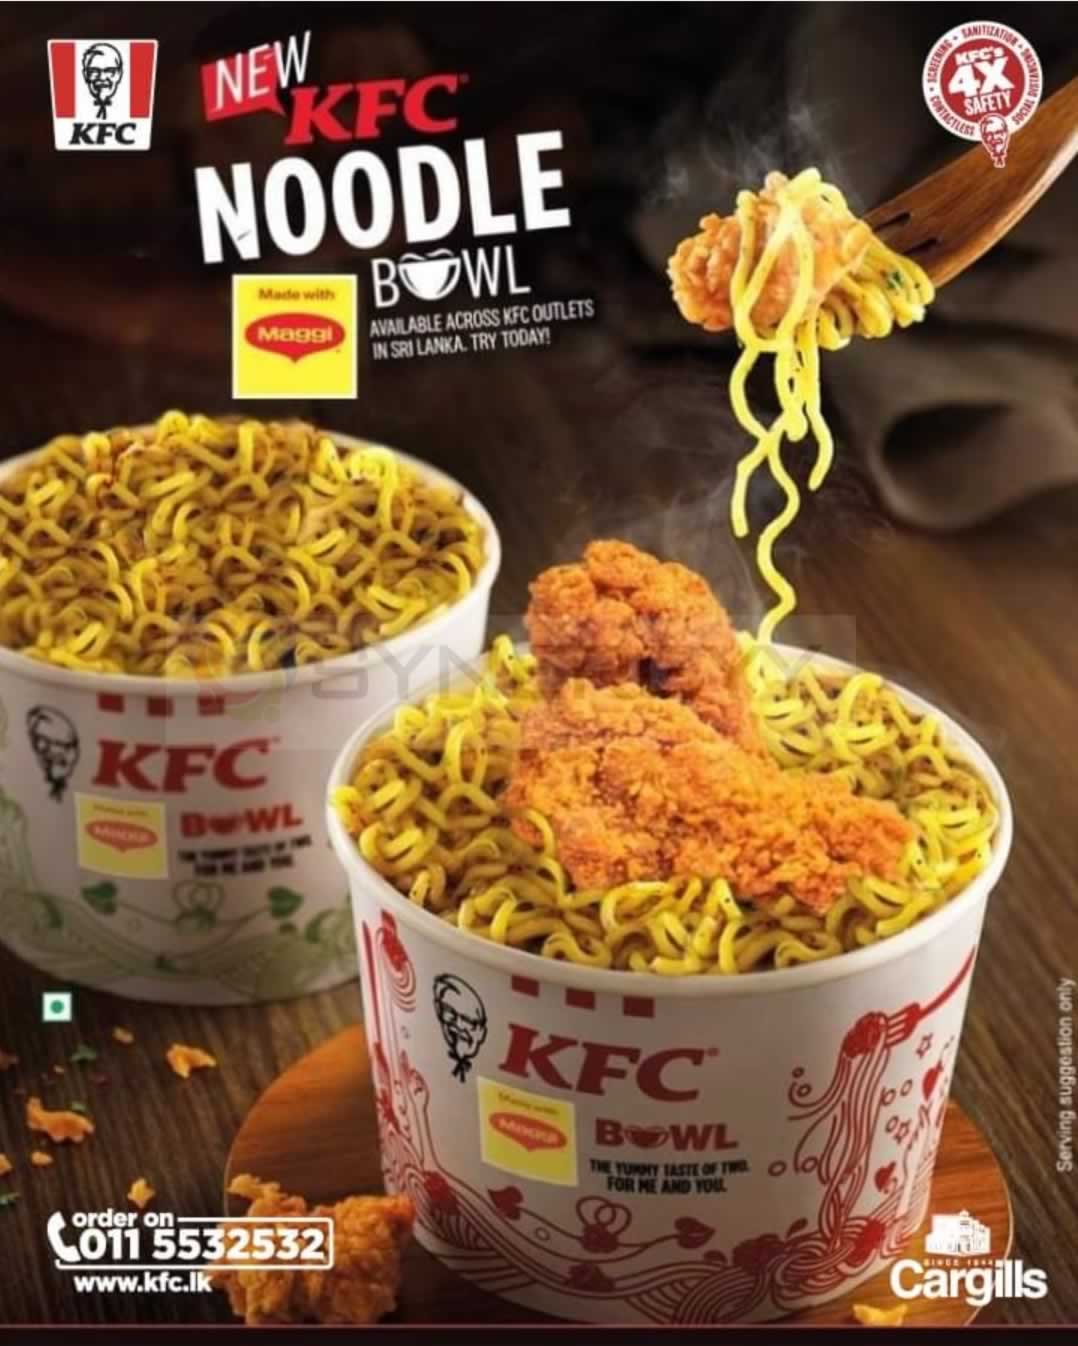 KFC Sri Lanka Introduce – All New KFC Noodle Bowl